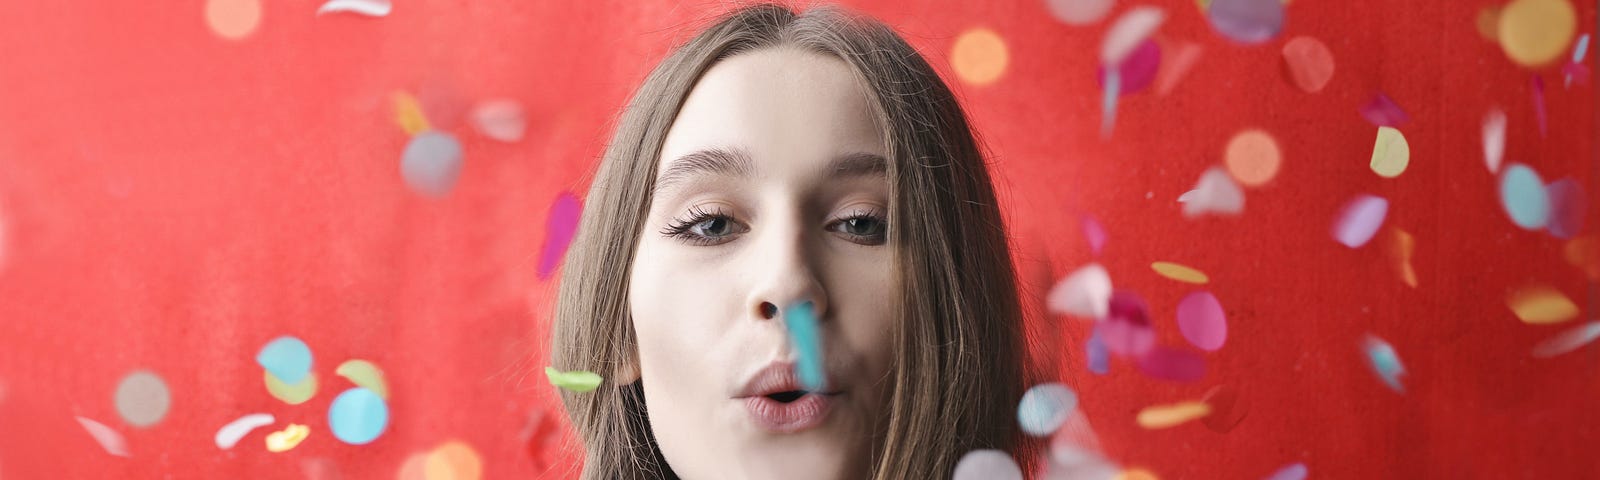 Girl blowing confetti